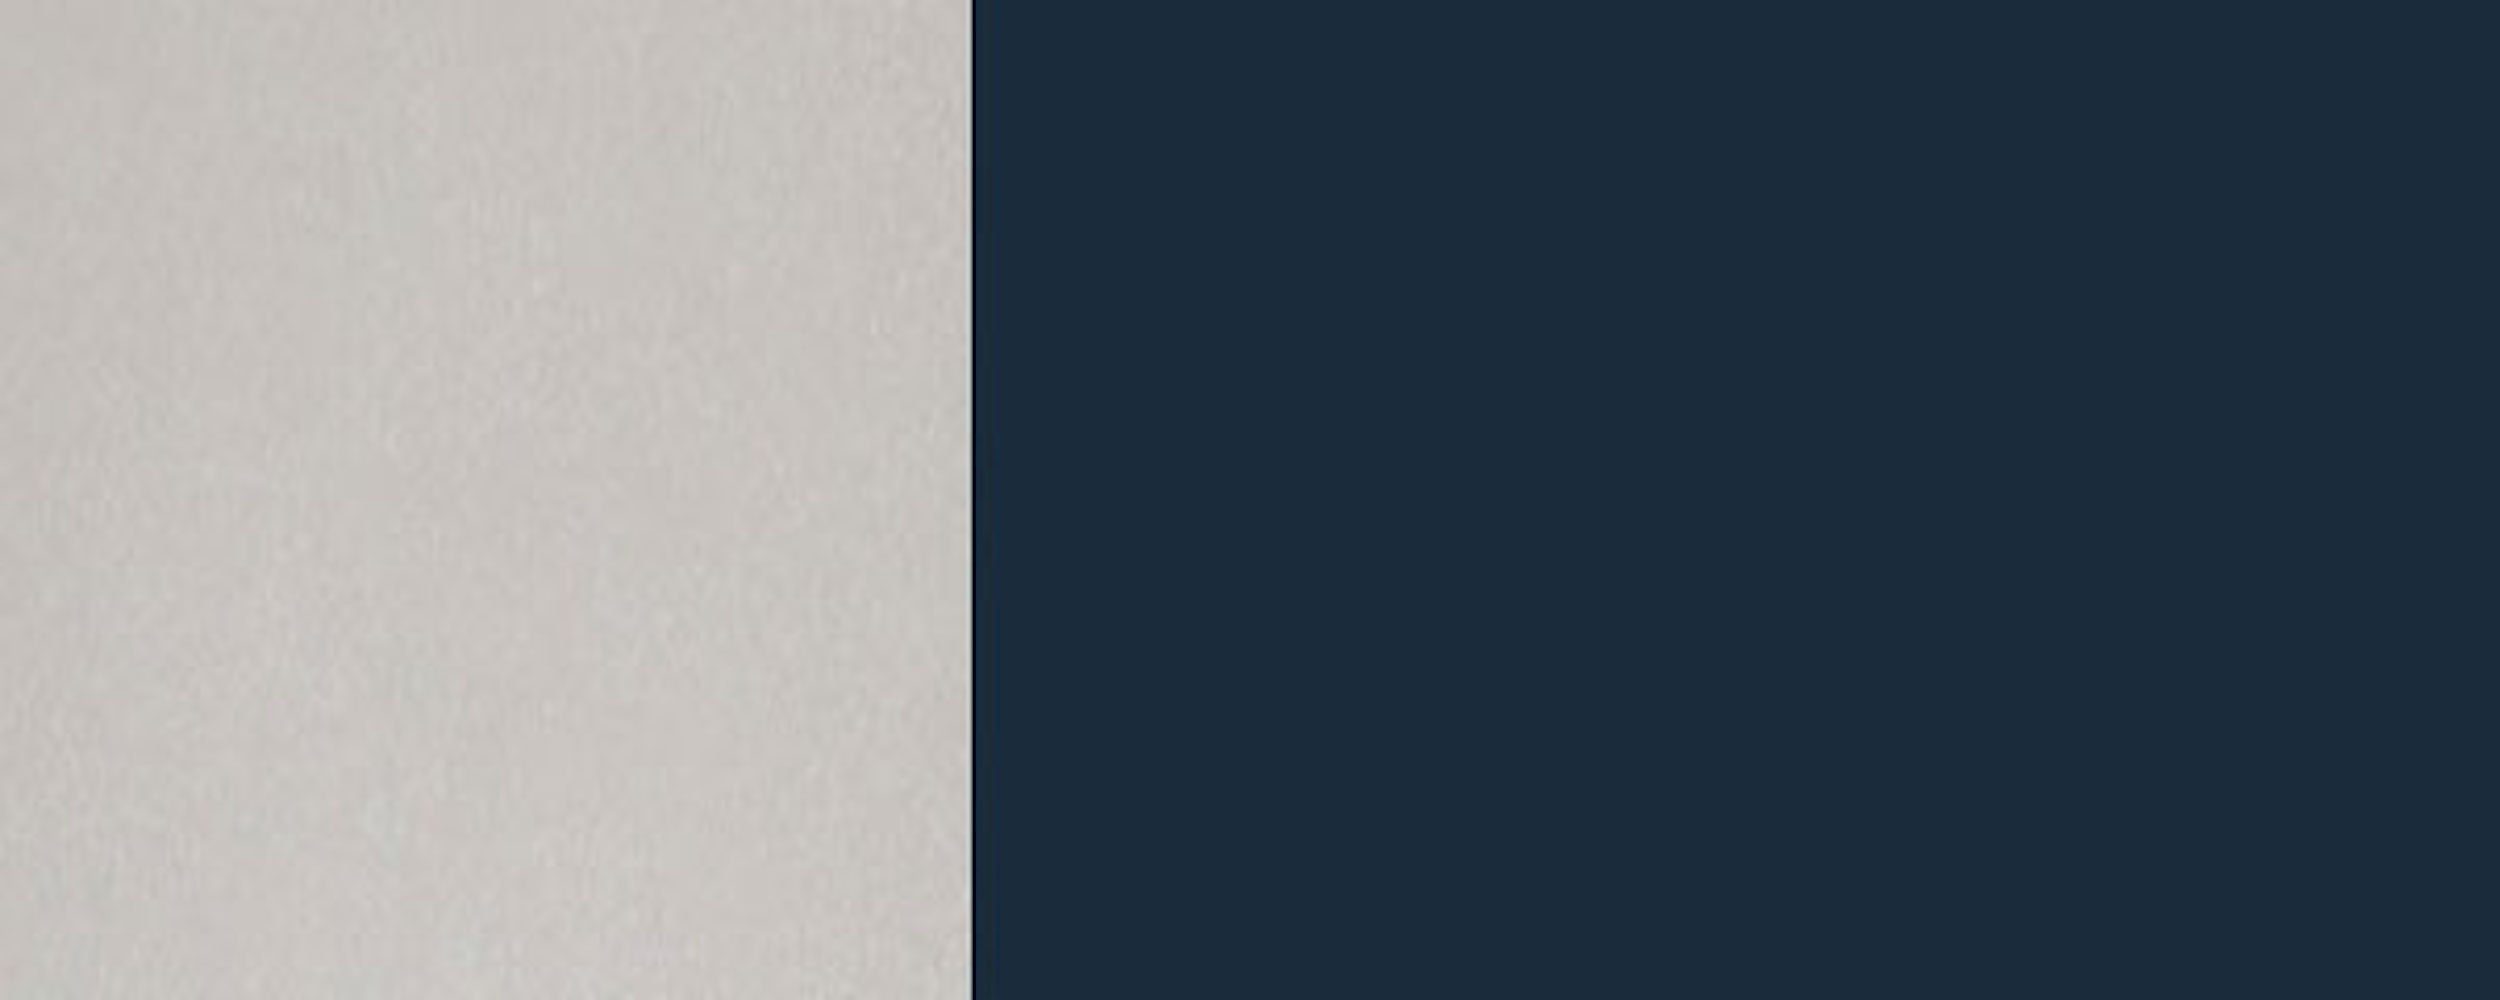 Feldmann-Wohnen Sockelblende stahlblau matt 5011 Sockelfarbe Front- RAL Tivoli, wählbar und vollintegriert 60cm